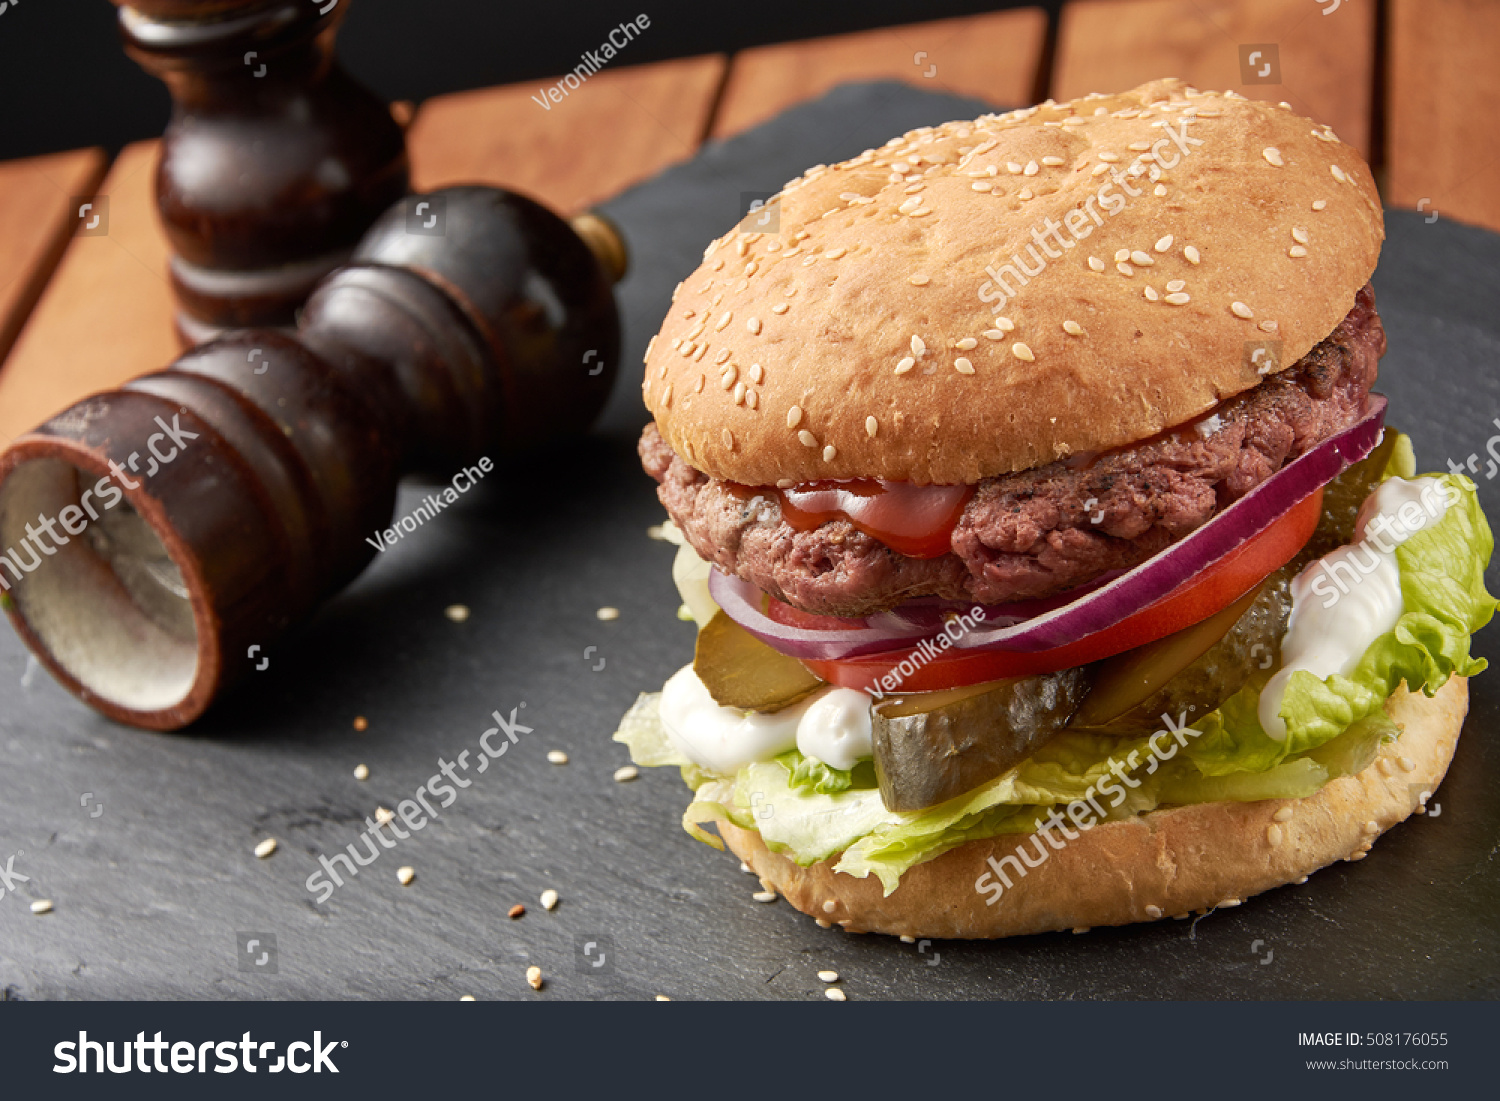 Floating Burger Stock Photo 508176055 - Shutterstock